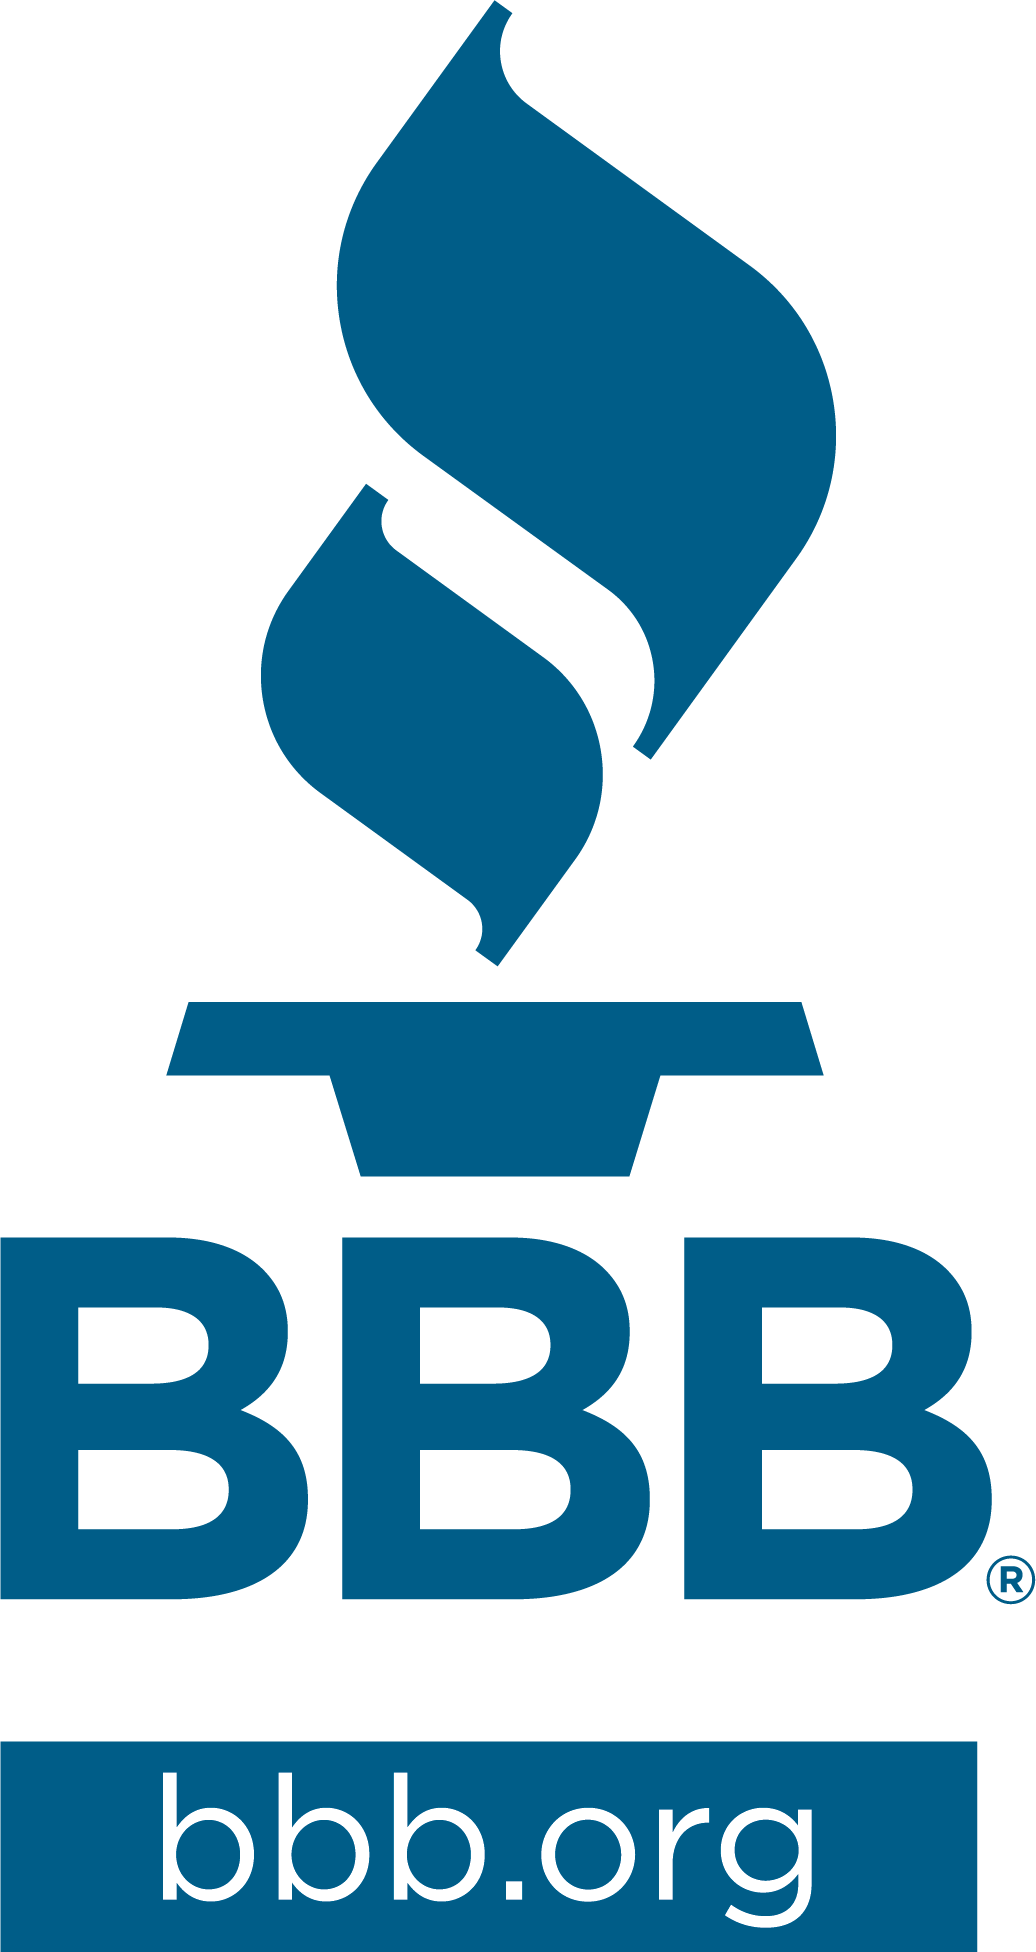 Better Business Bureau of Southern Colorado logo